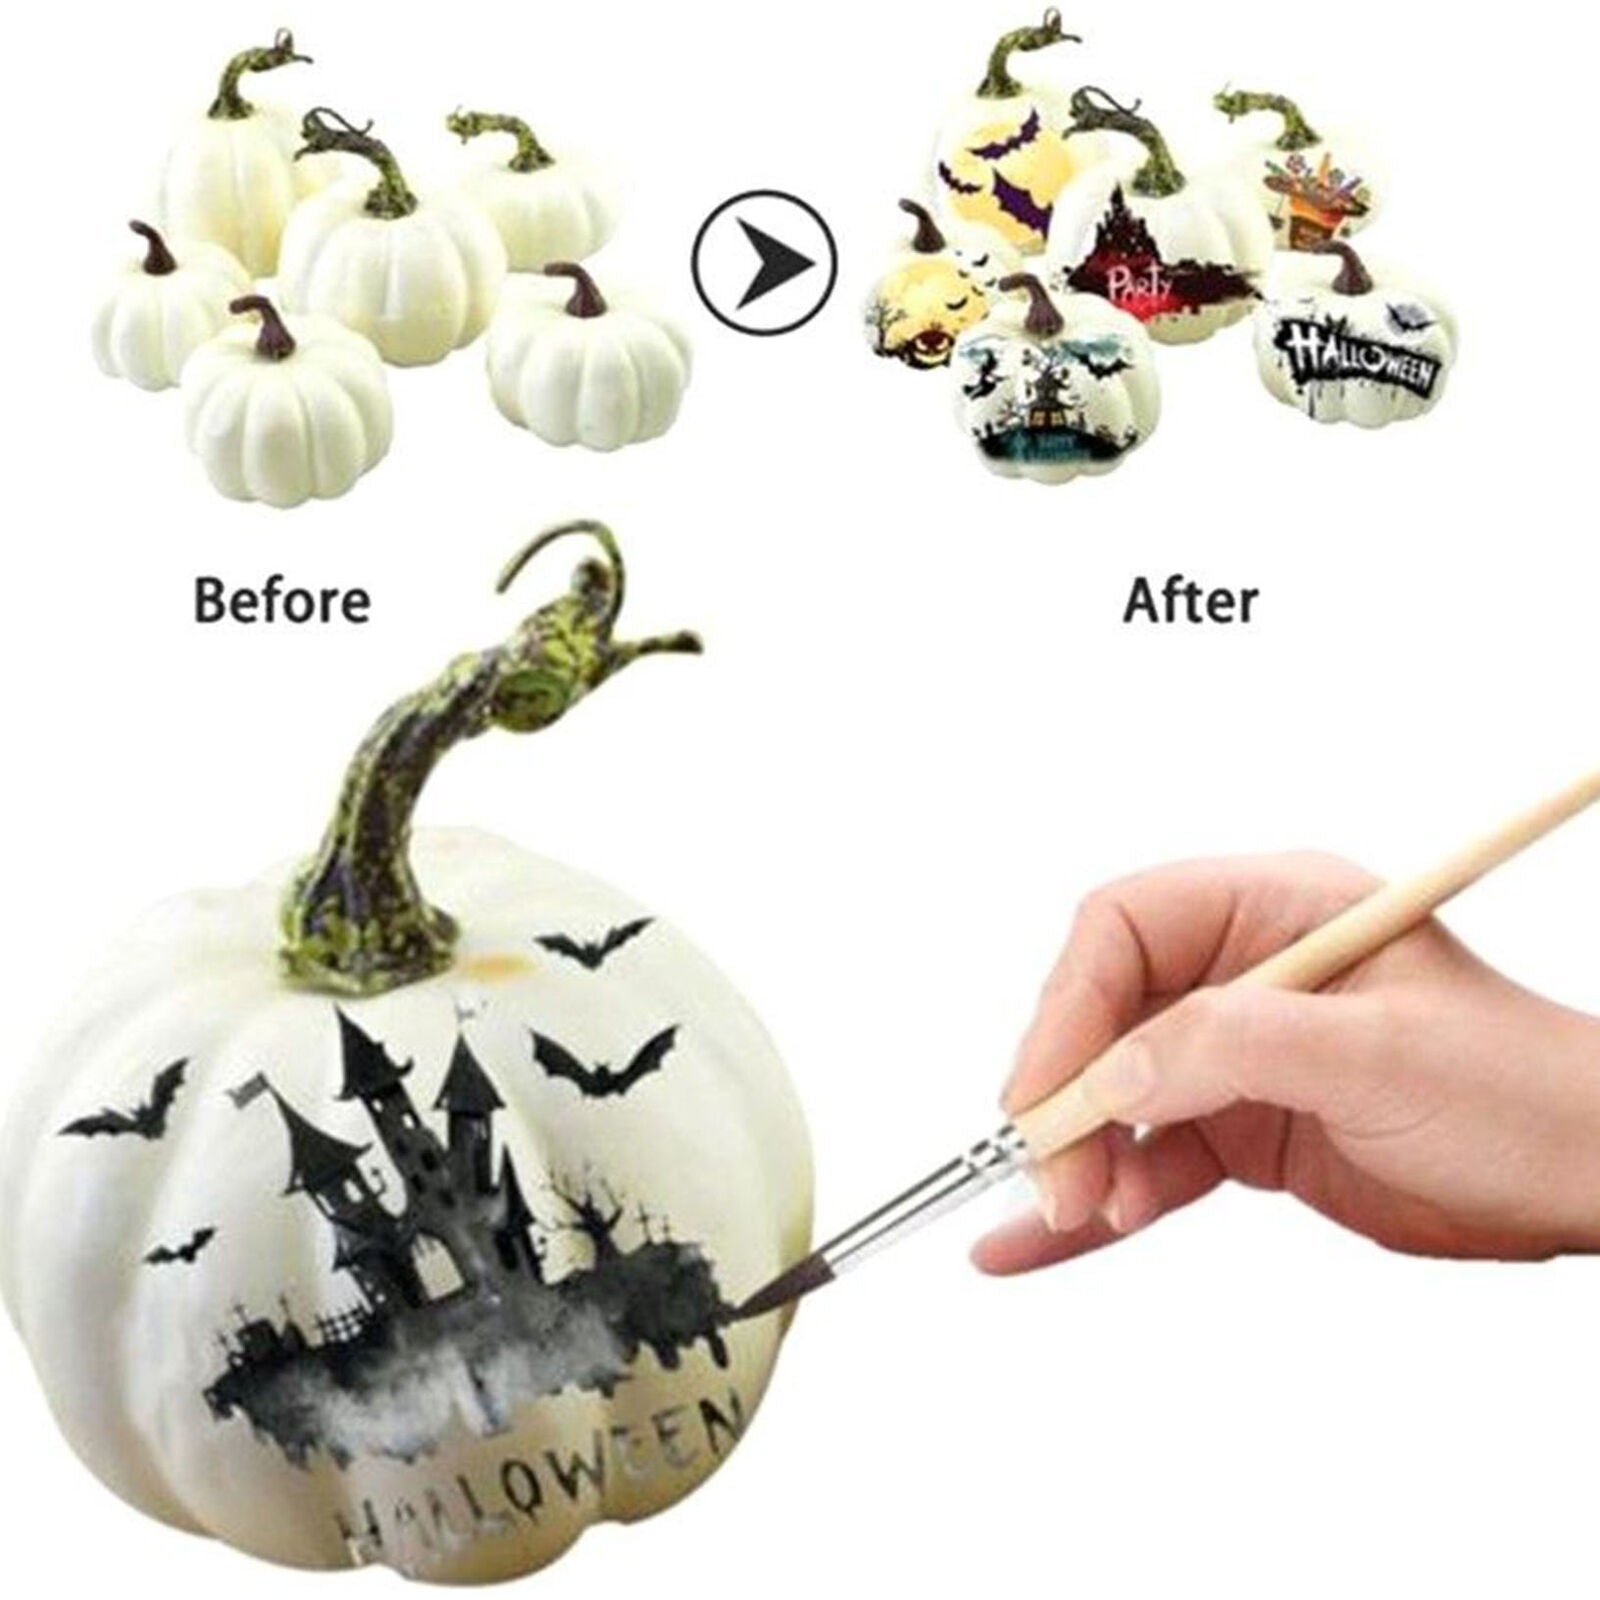 12Pcs Halloween Artificial Mini Foam Pumpkin Simulation Props Garden Party Decor